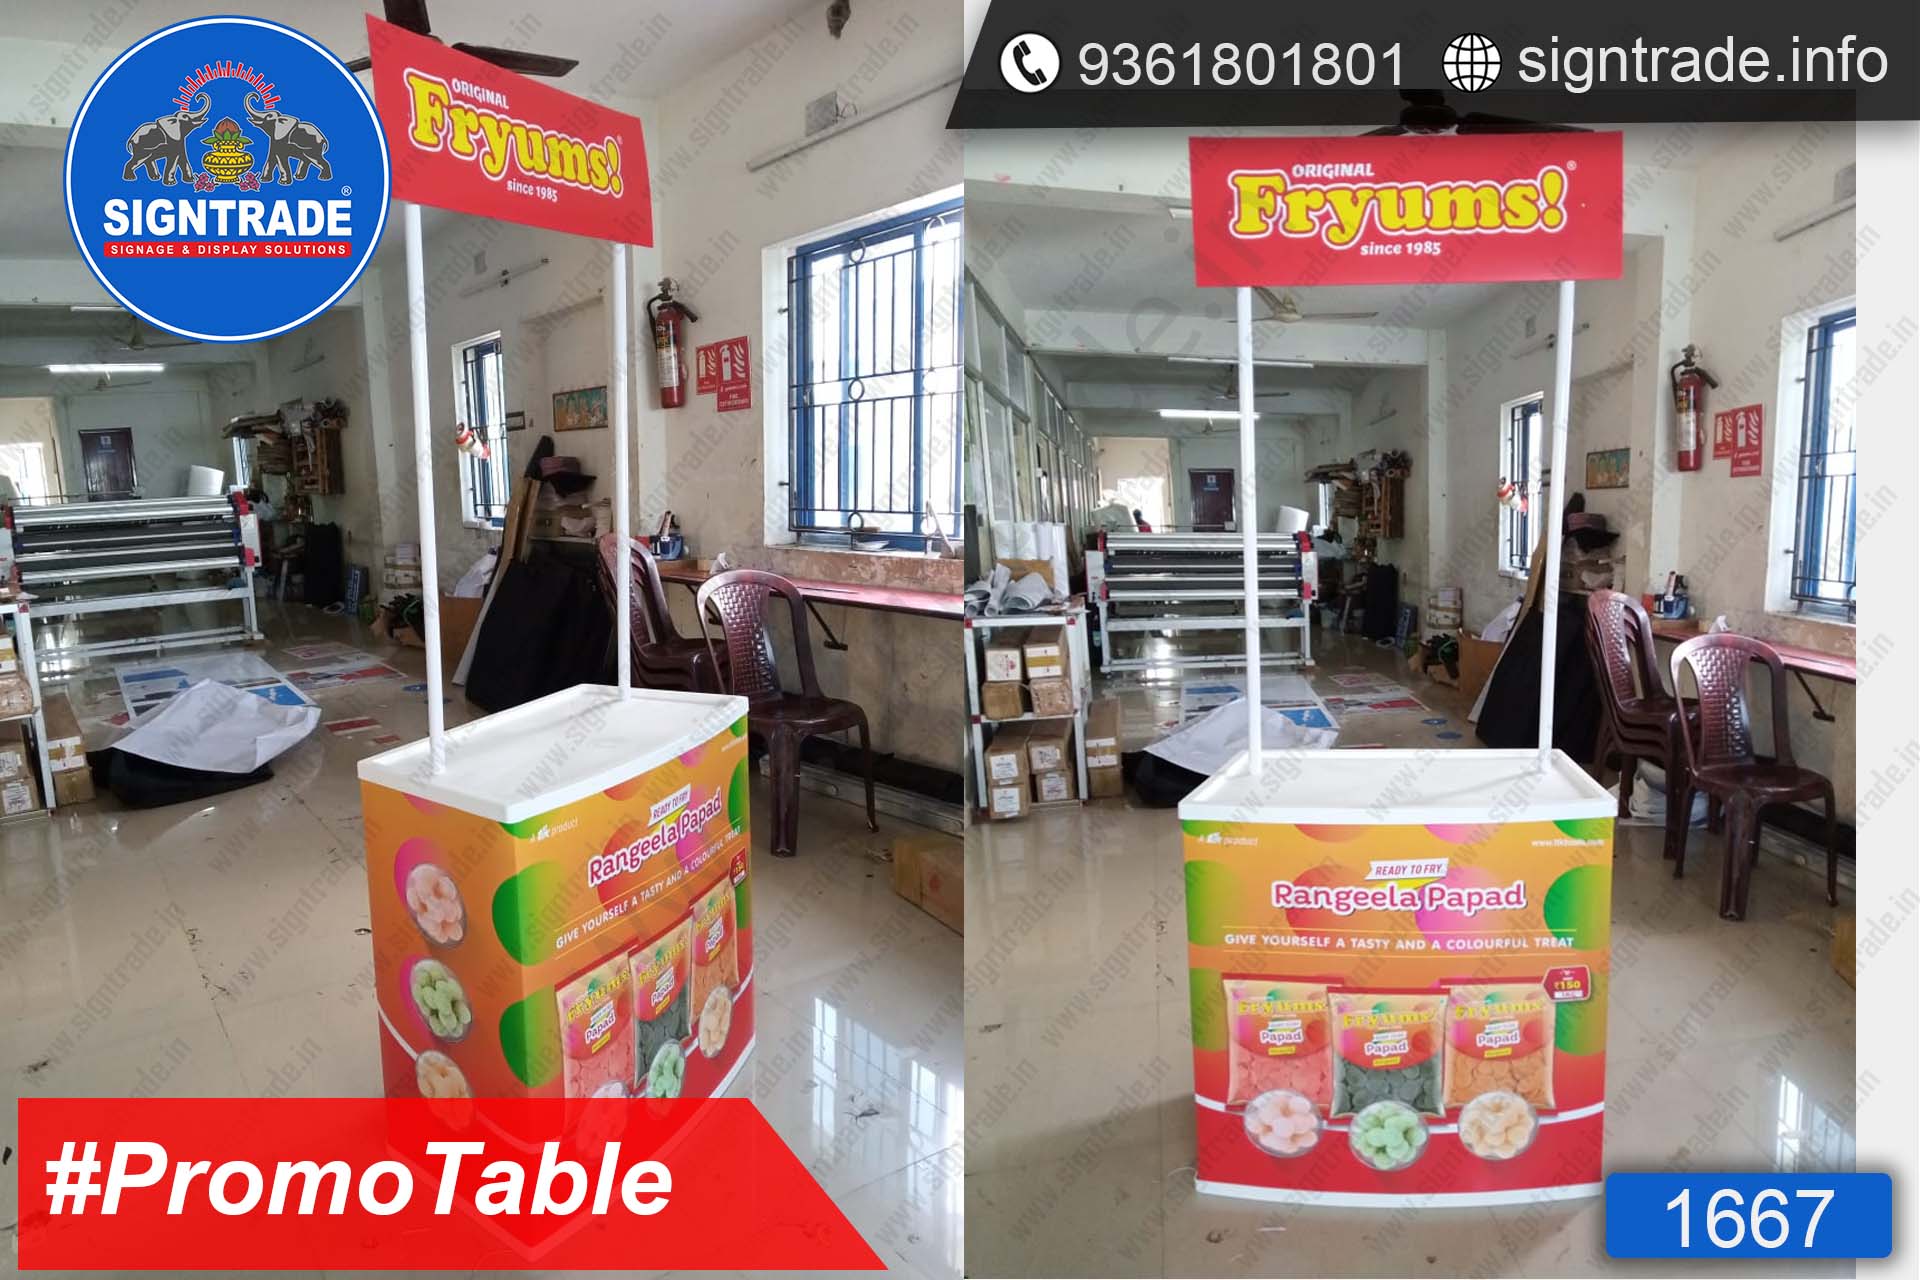 Fryums Original Rangeela Papad - SIGNTRADE - Promotional Table Manufactures in Chennai